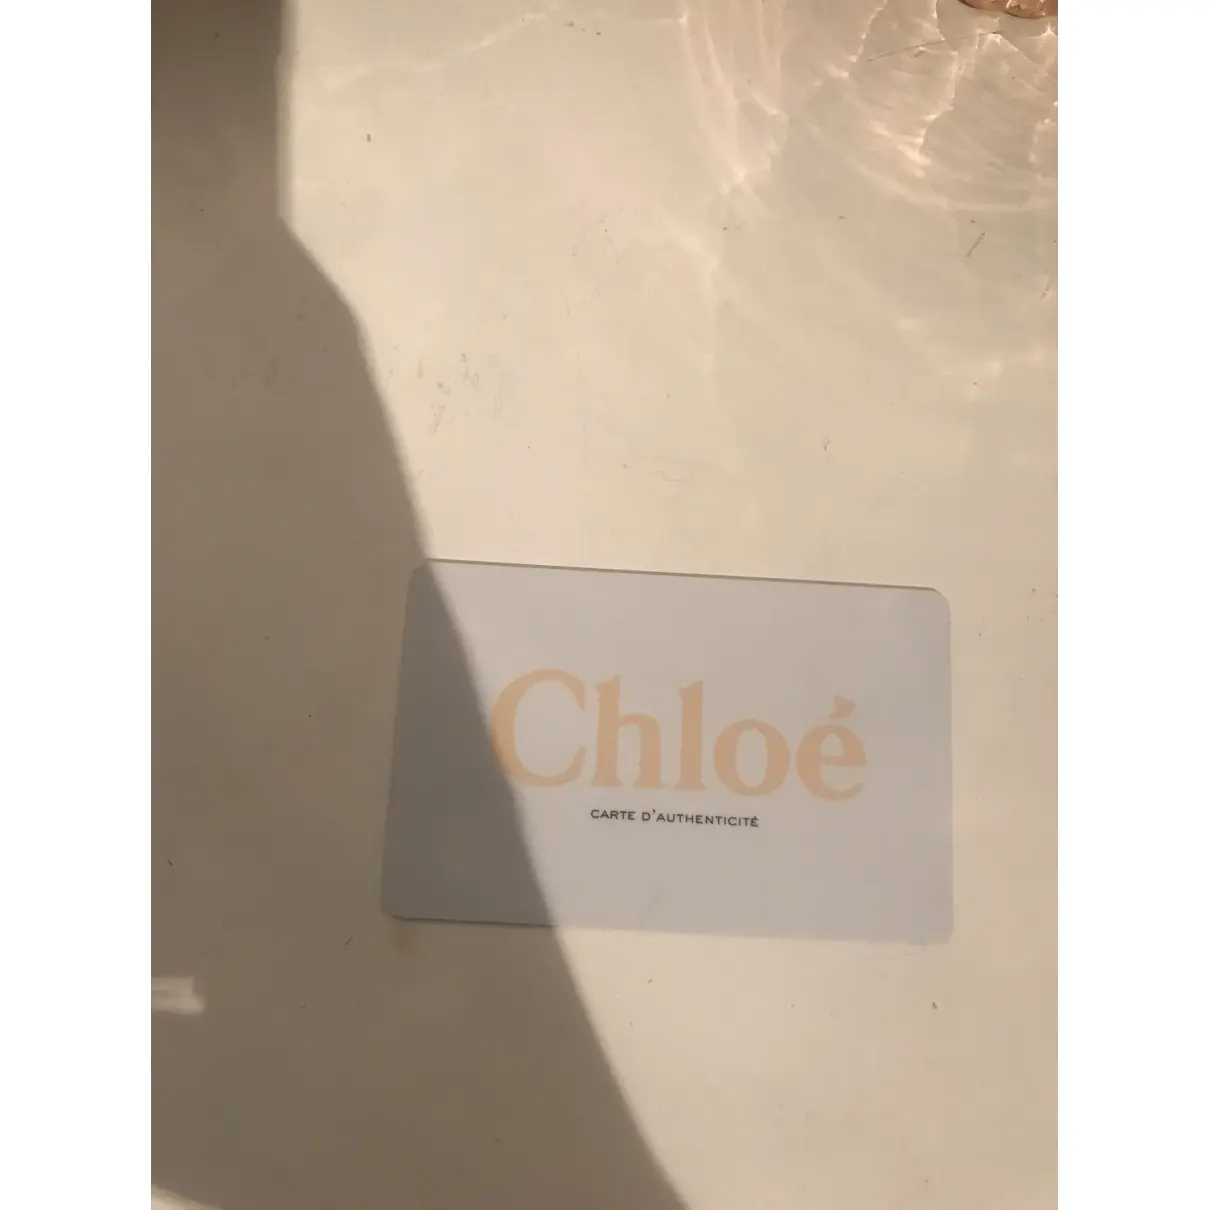 Buy Chloé Jane leather crossbody bag online